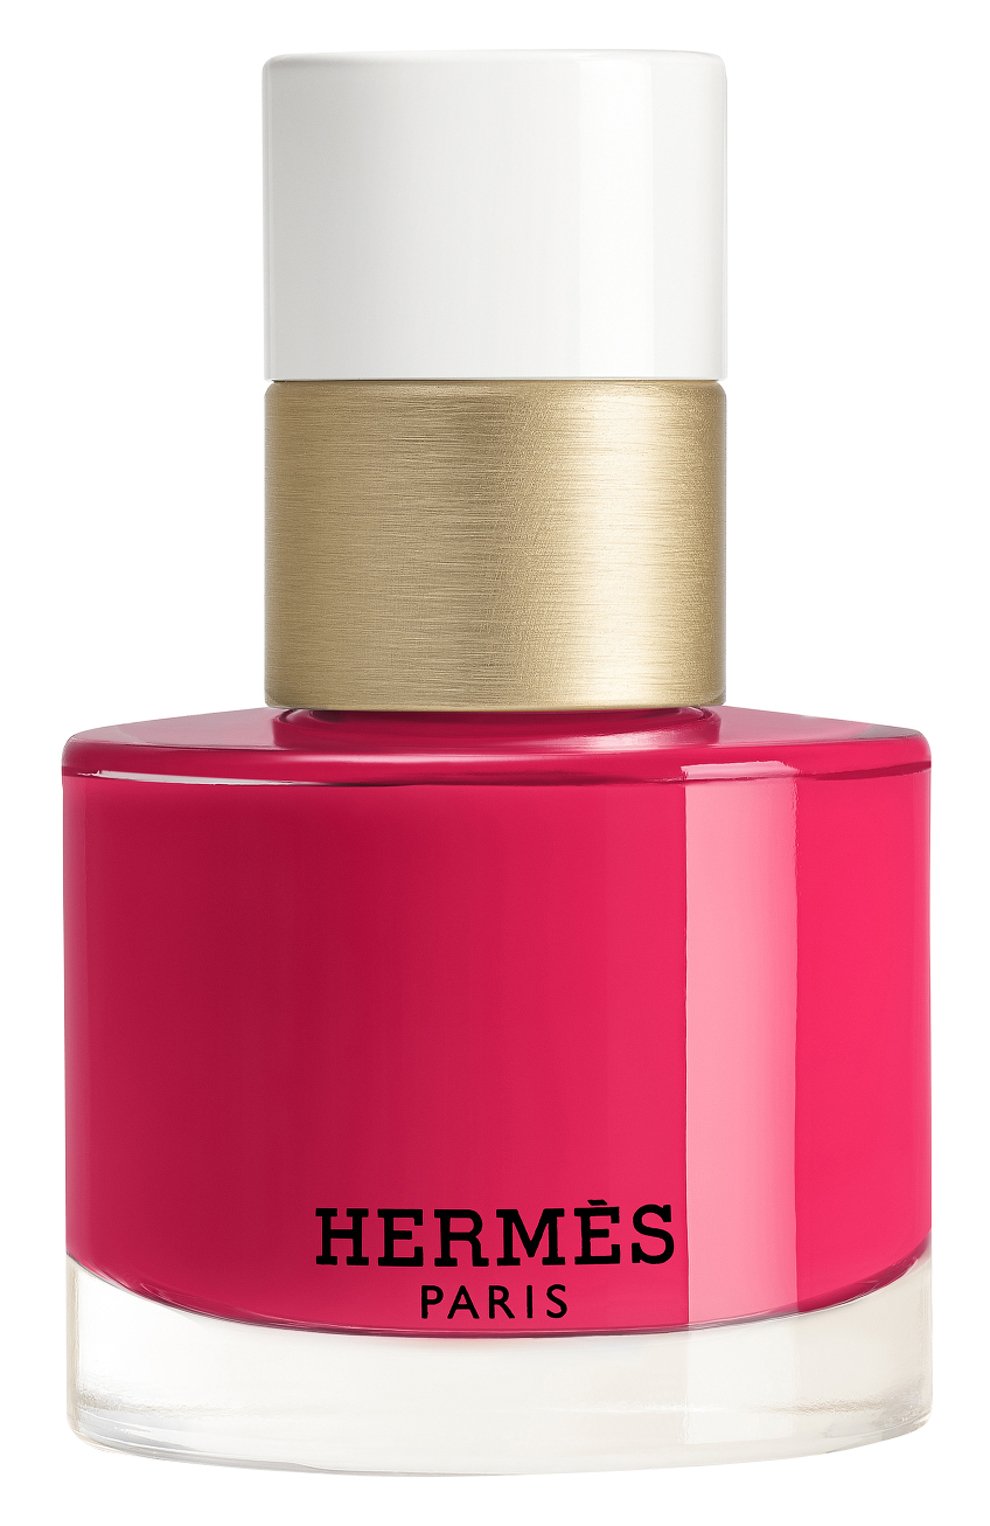 Лак для ногтей les mains hermès, rose indien (15ml) HERMÈS  цвета, арт. 60301VV070H | Фото 1 (Обьем косметики: 100ml)